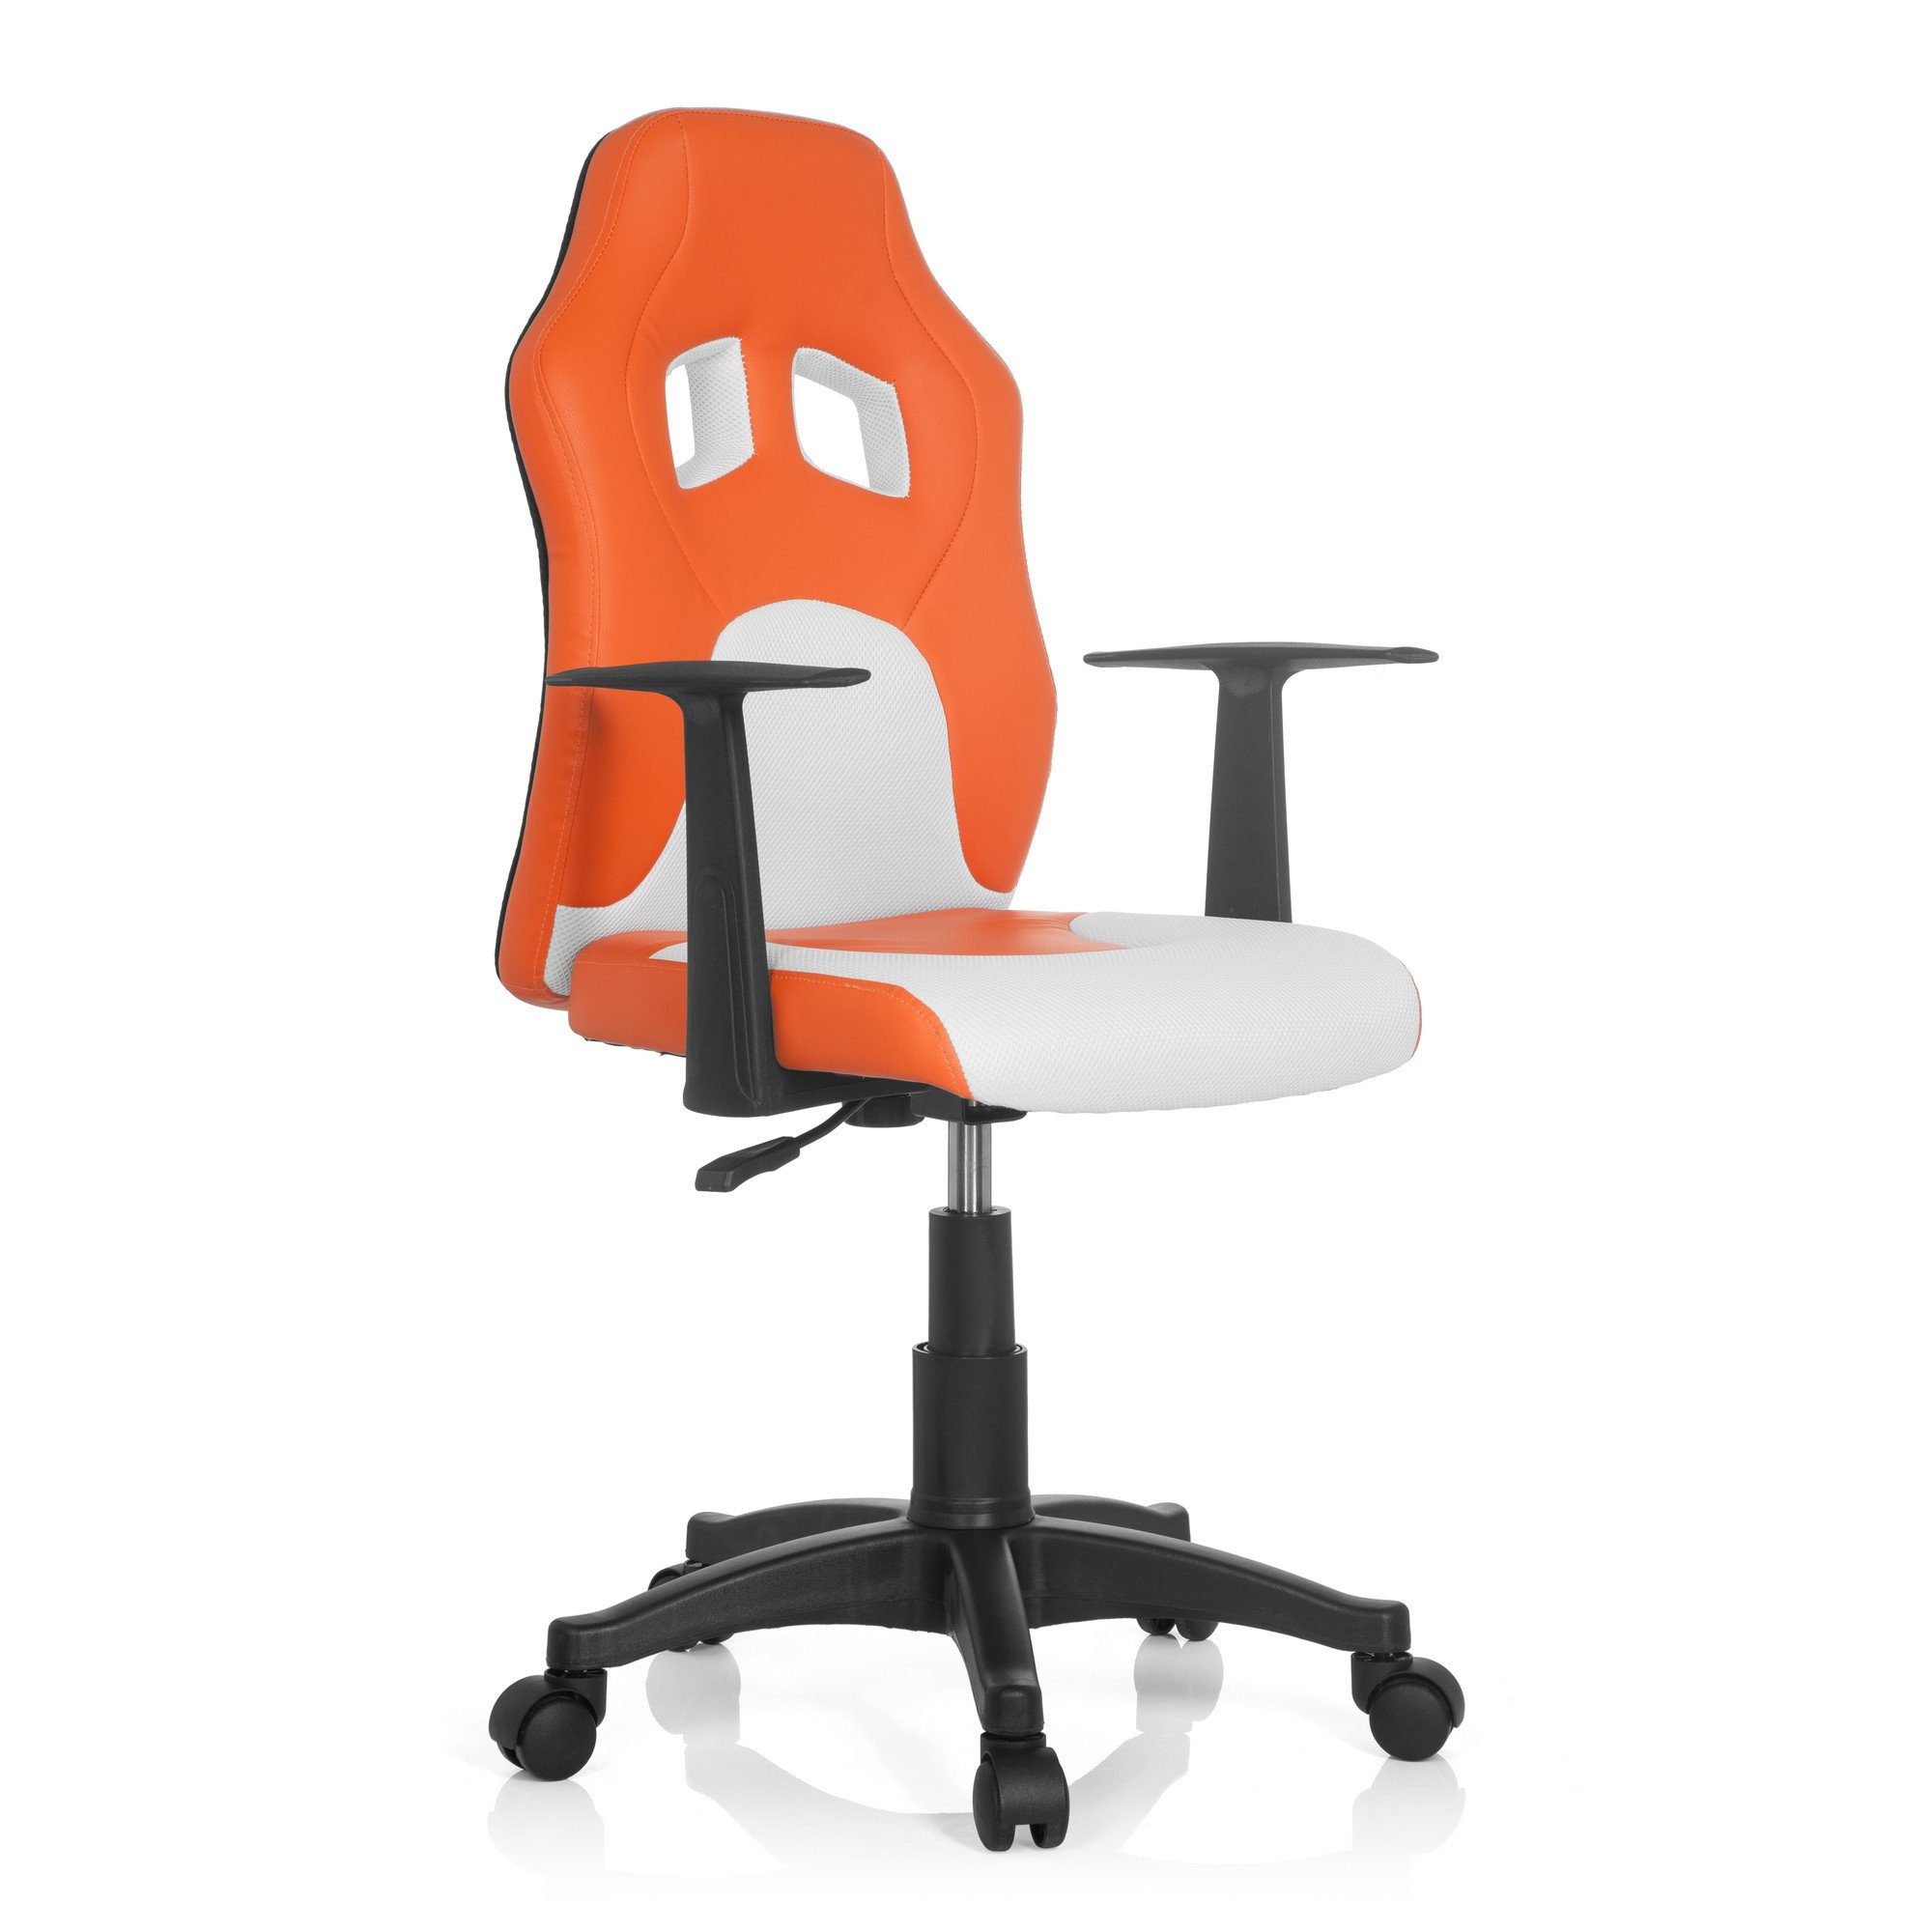 Orange AL Drehstuhl Weiß OFFICE / TEEN GAME ergonomisch Kunstleder, Kinderdrehstuhl hjh